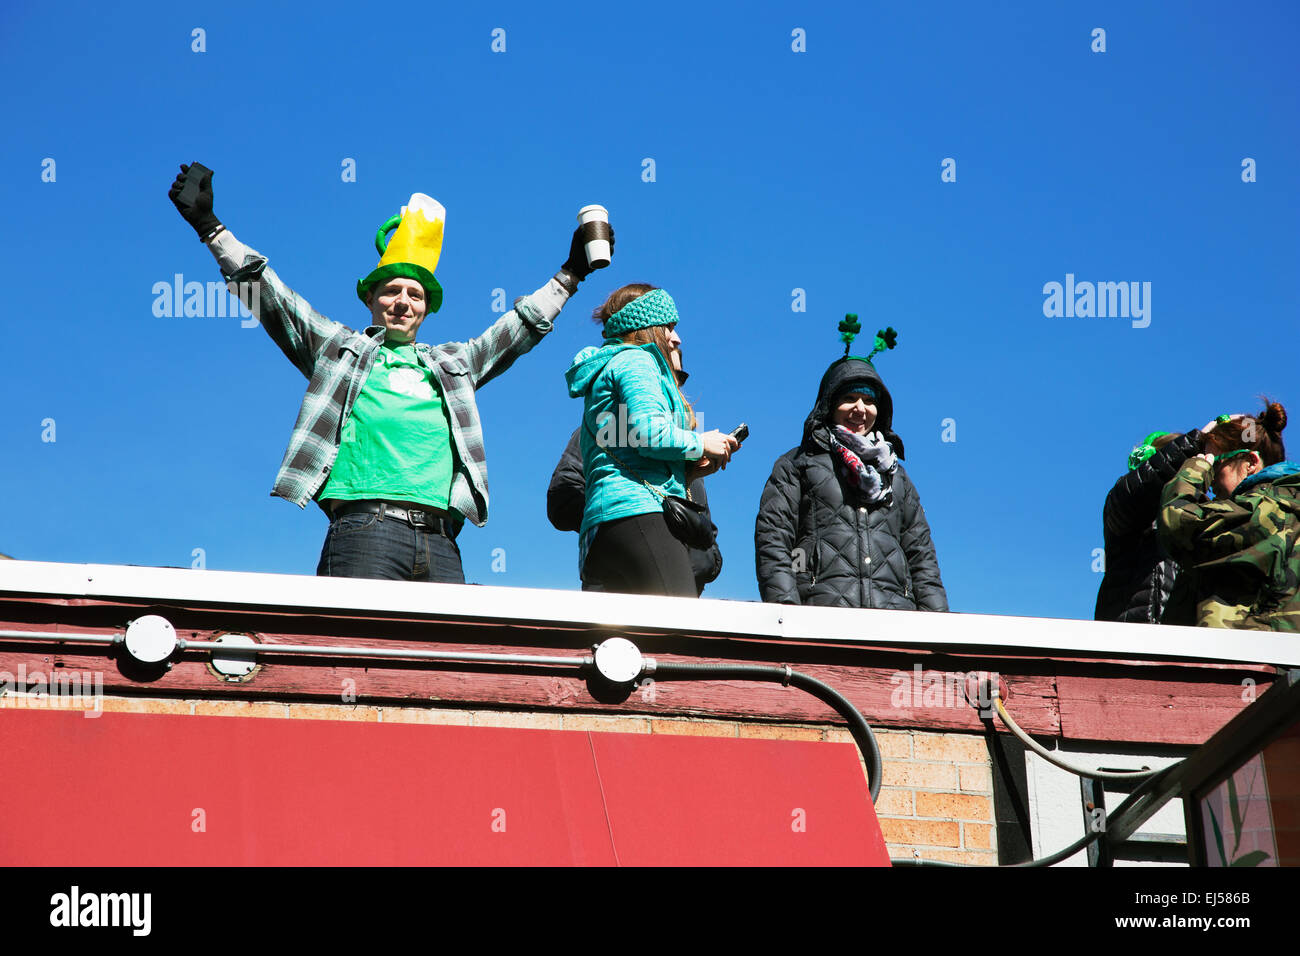 Enthusiastic crowd, St. Patrick's Day Parade, 2014, South Boston, Massachusetts, USA Stock Photo